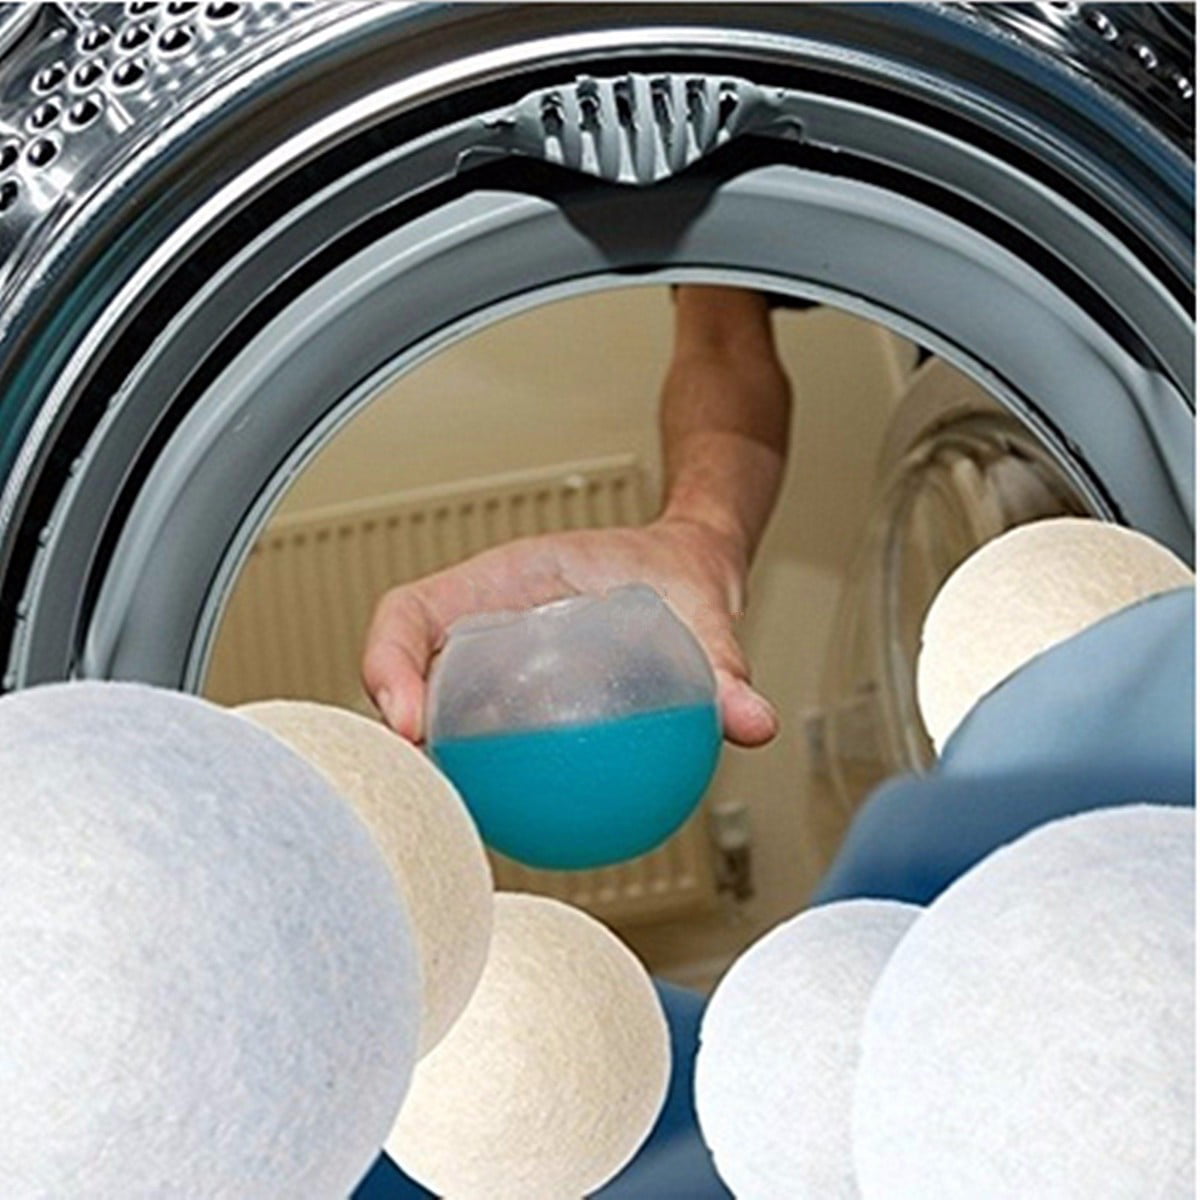 1pc Natural Fabric Virgin Wool Dryer Balls Reusable Softener Laundry White NEW S 